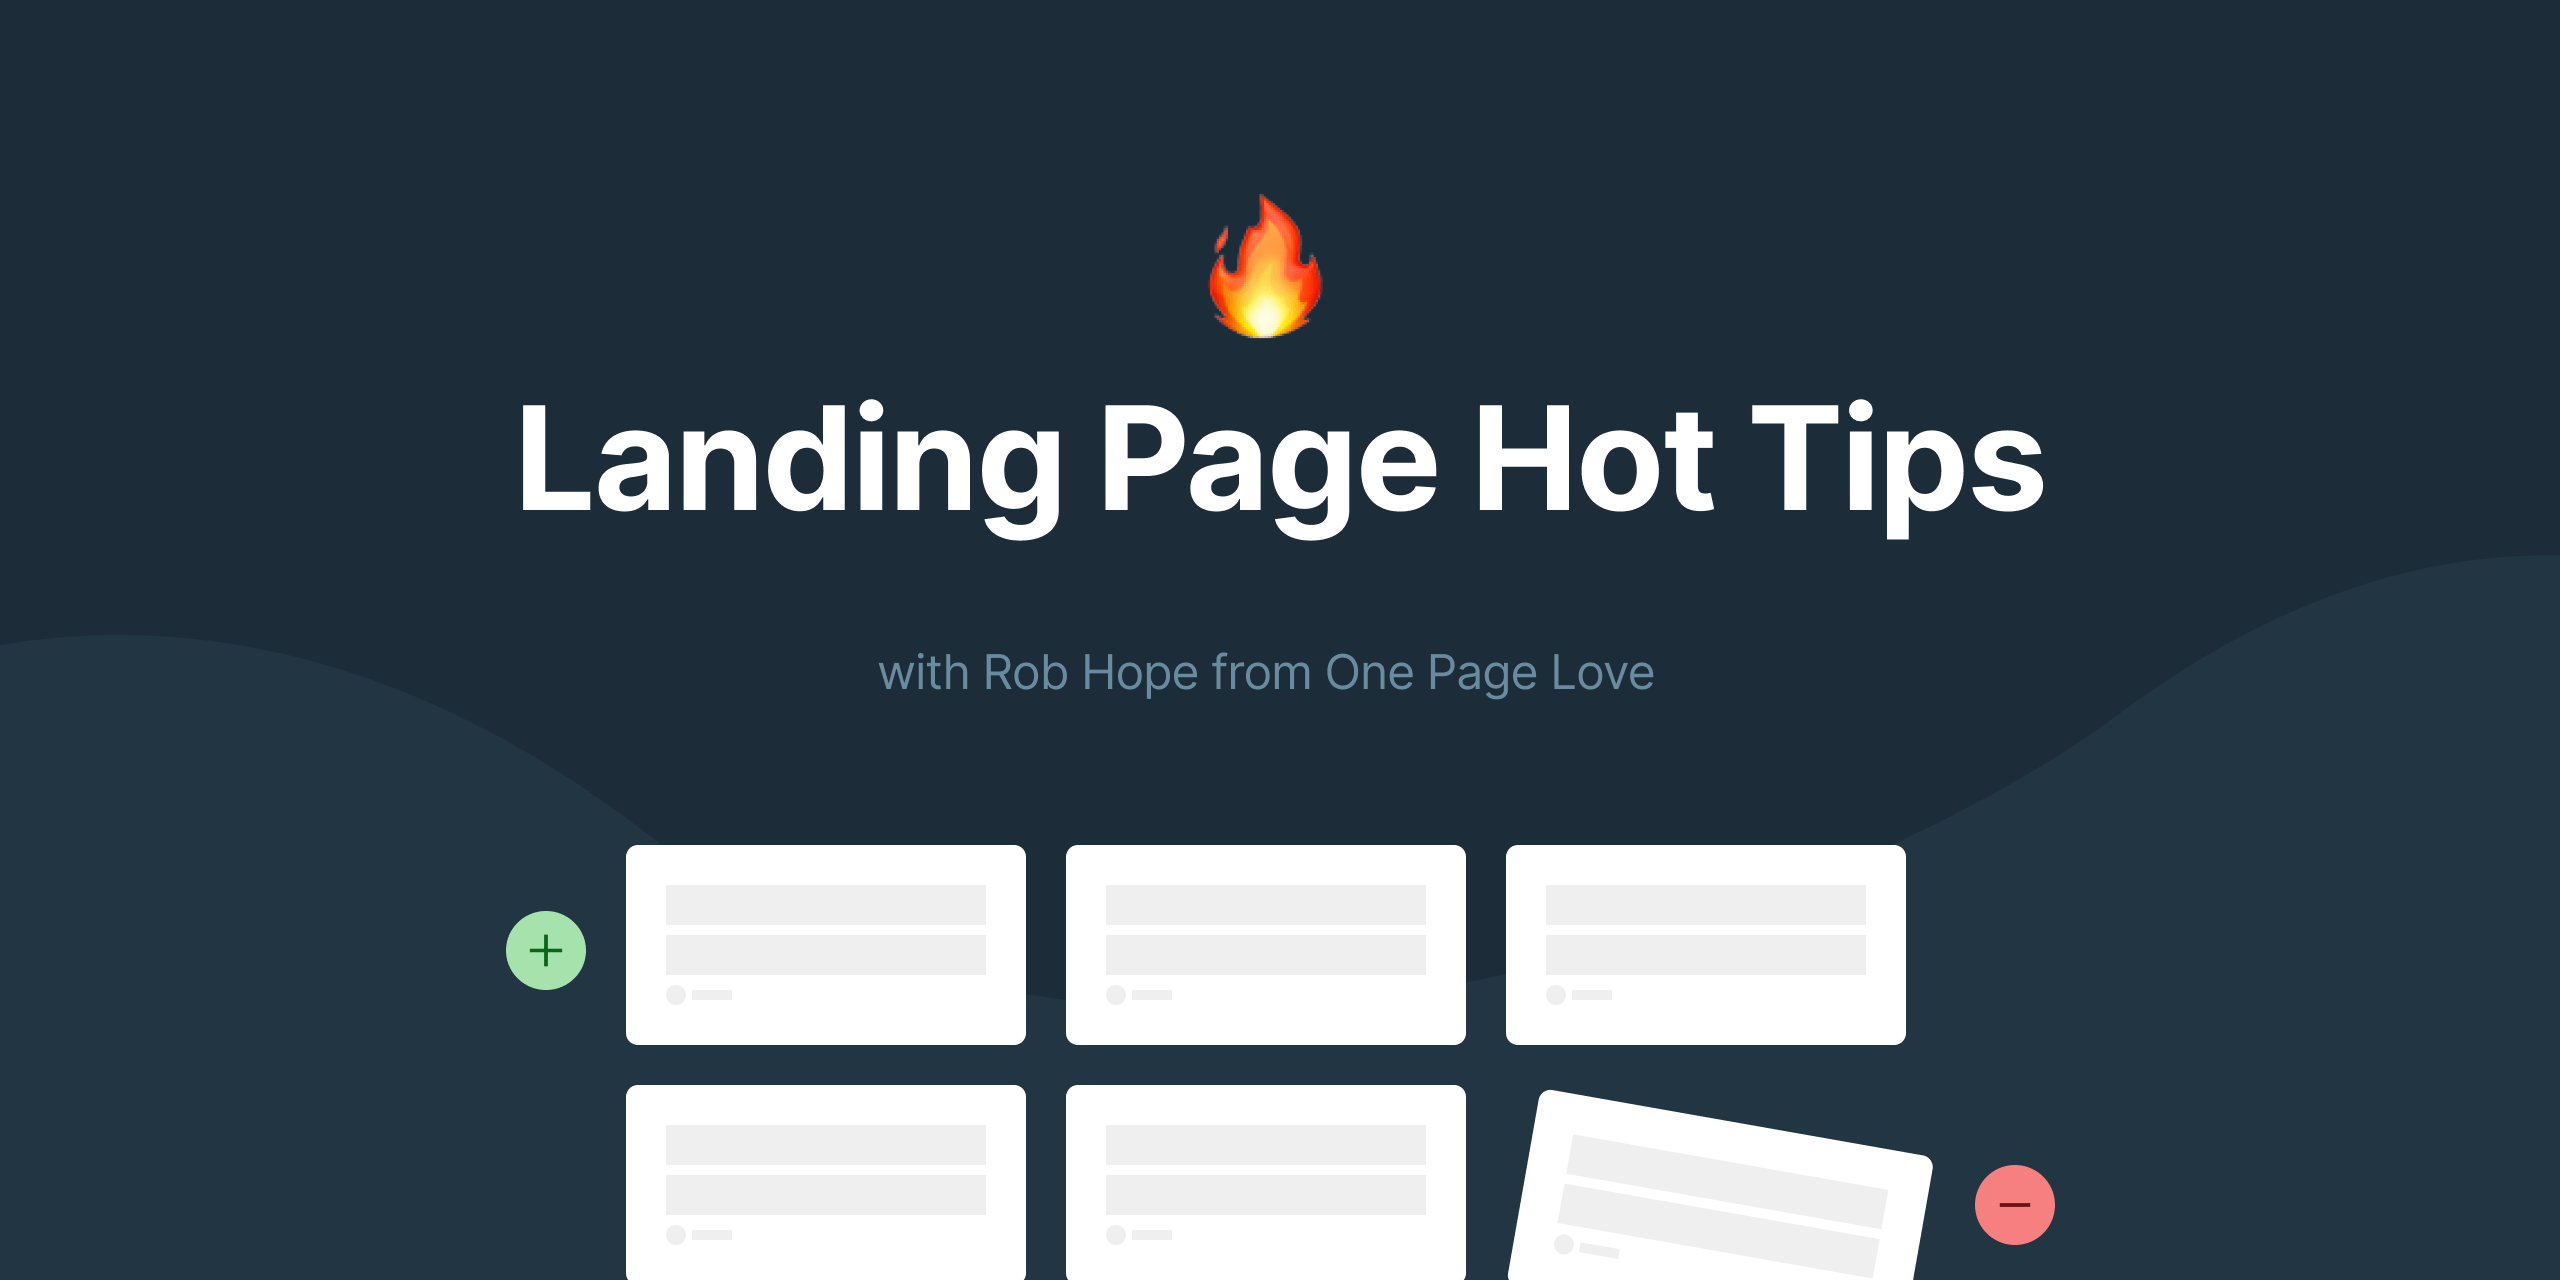 Landing page hot tips image